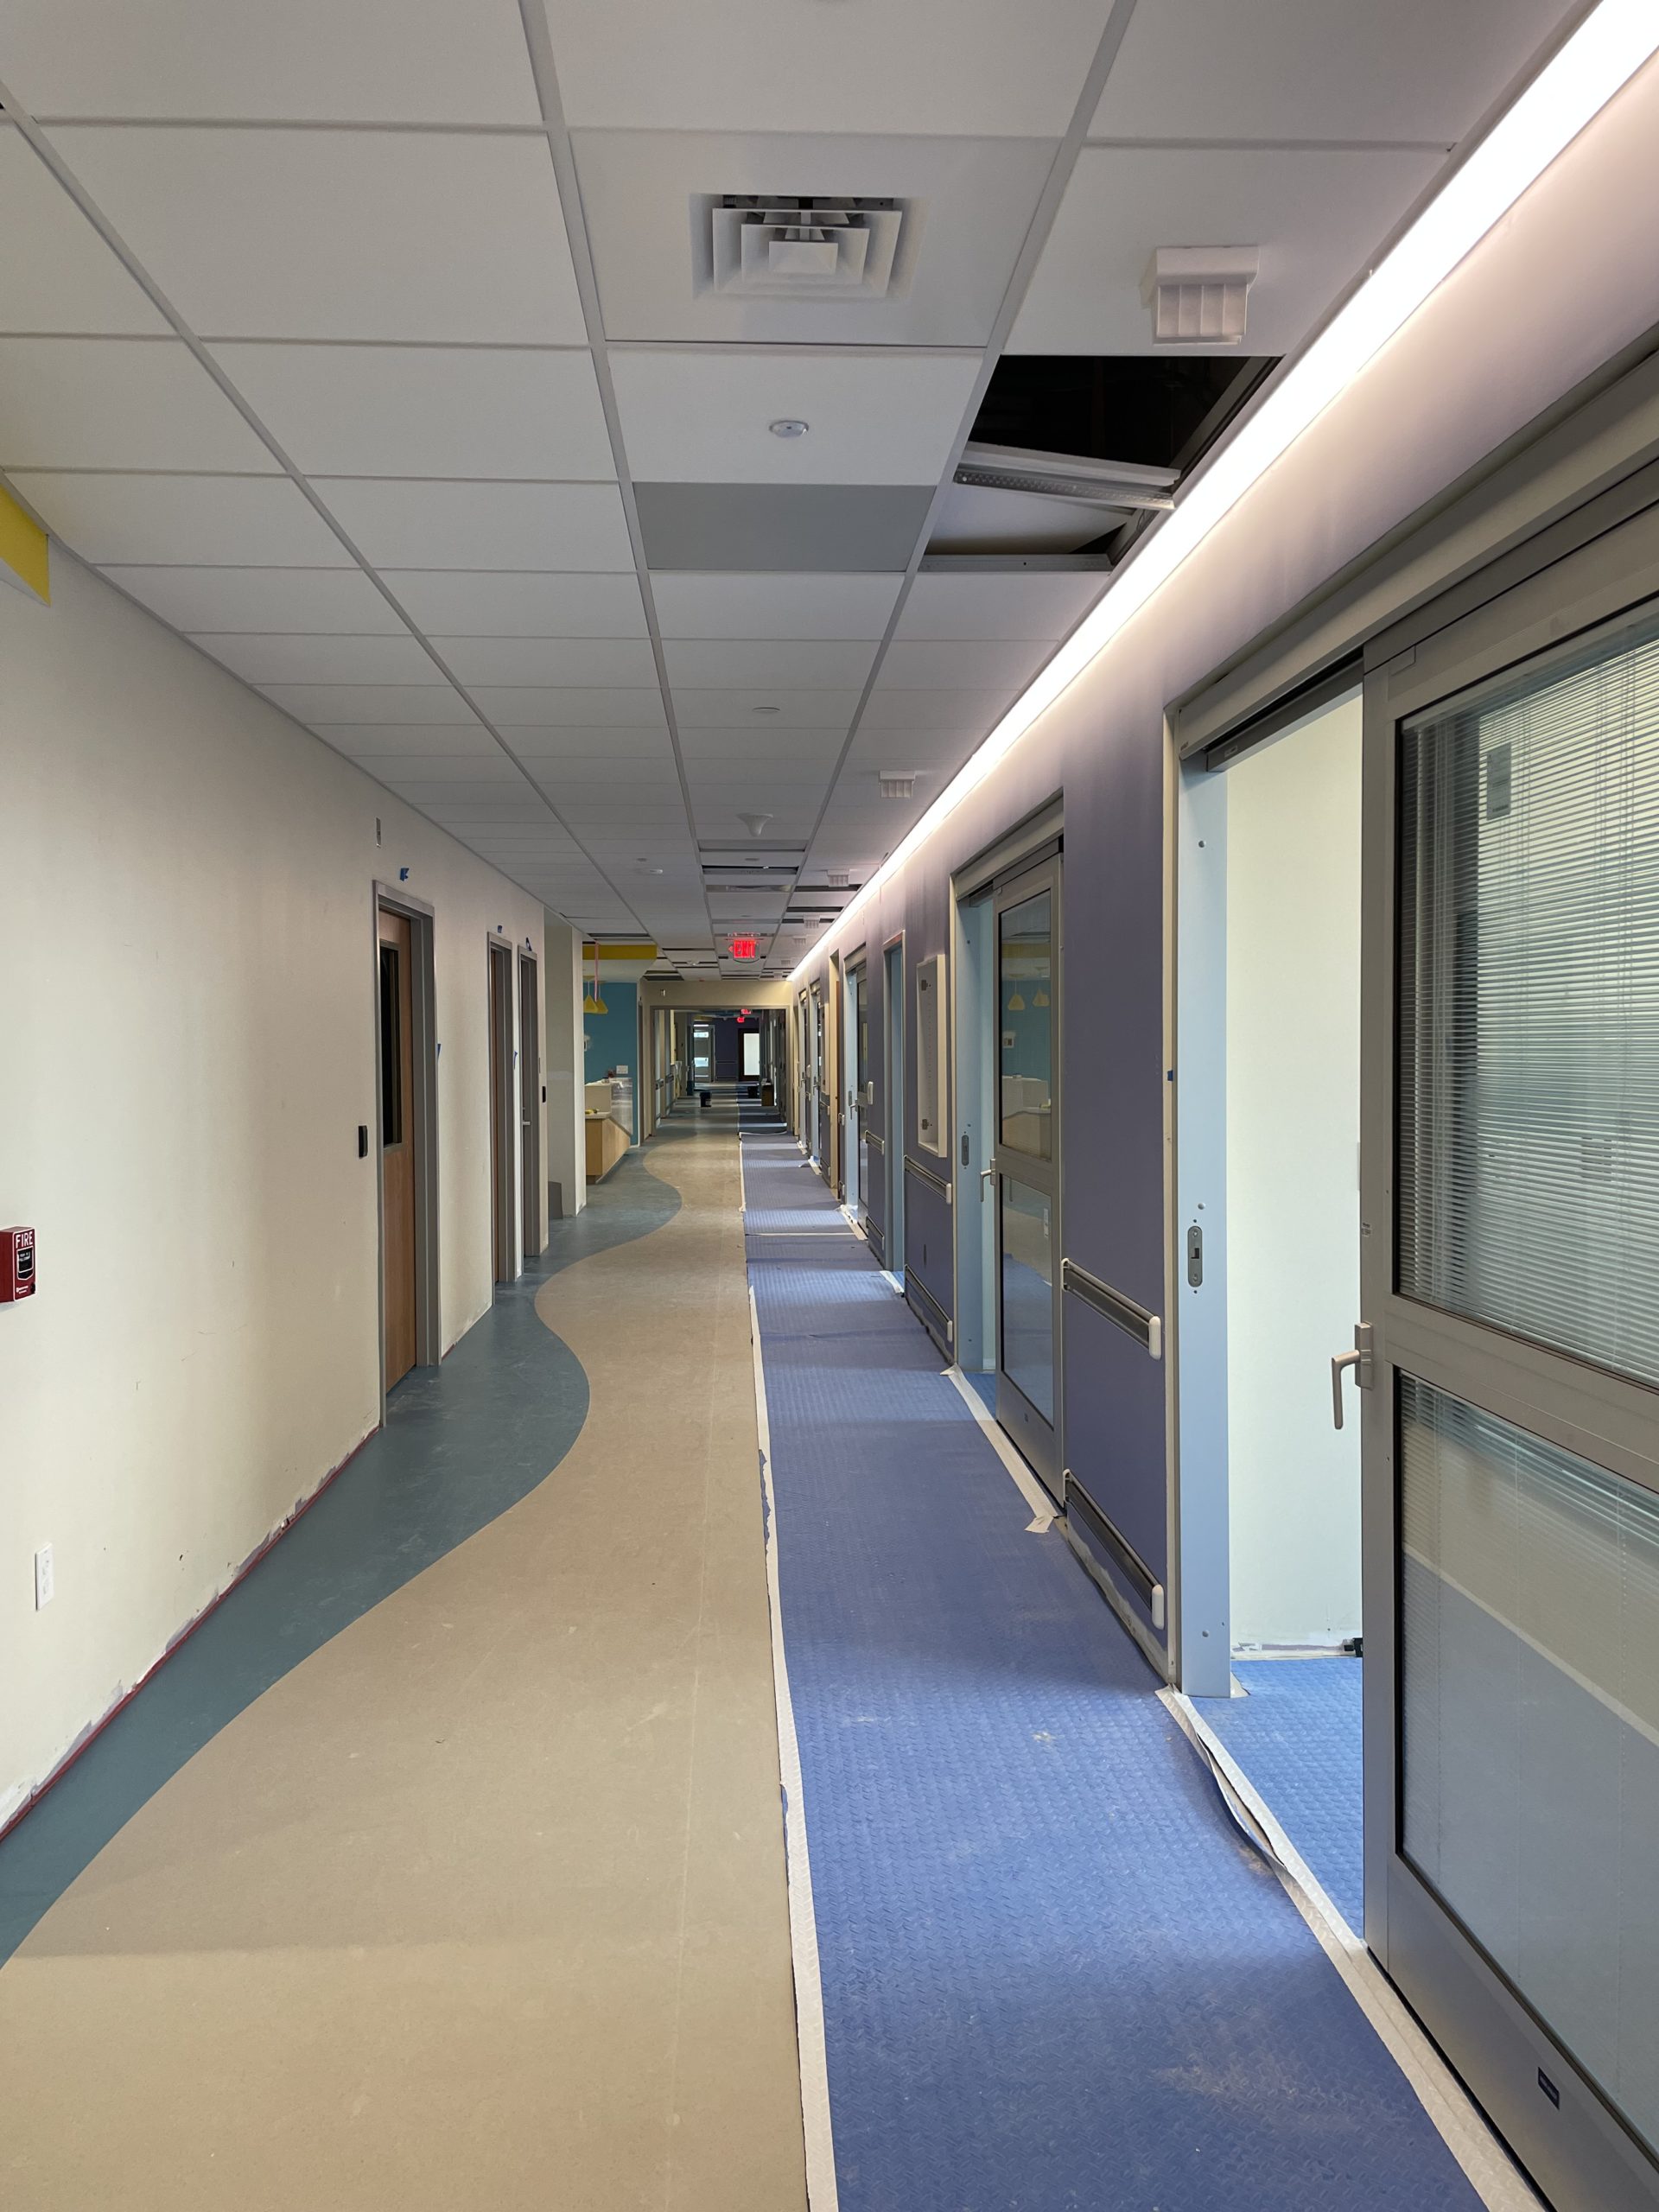 A hallway of a hospital under construction